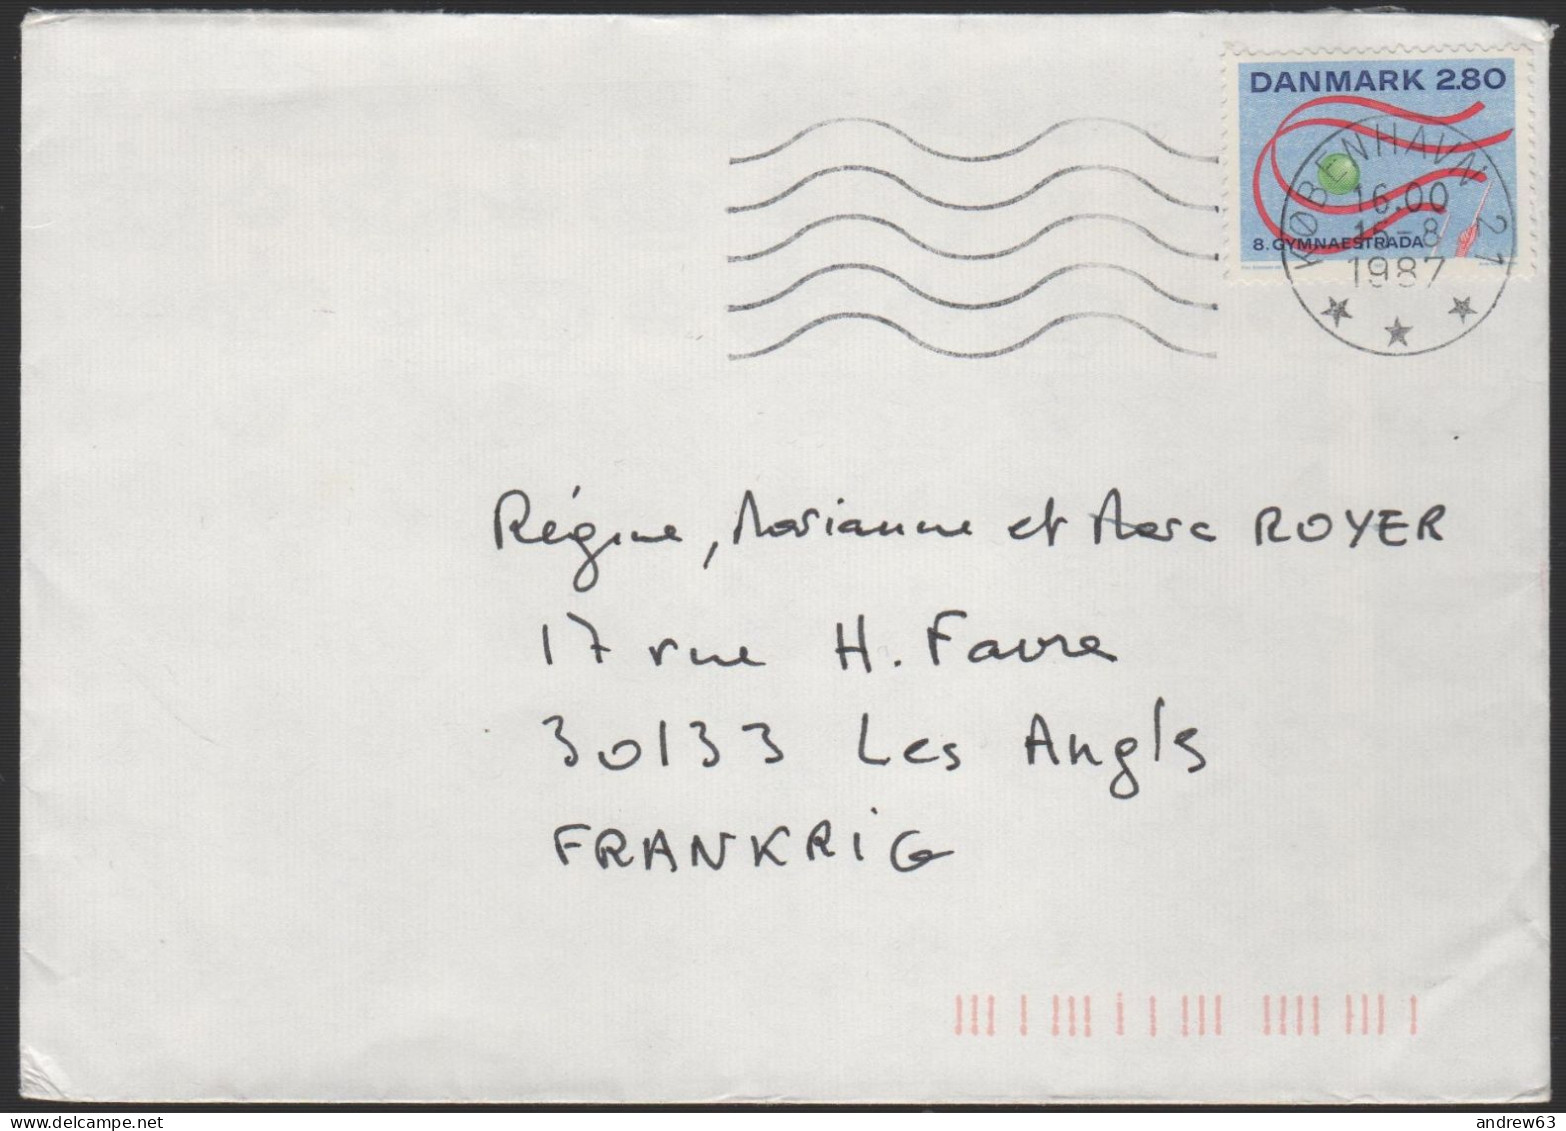 DANIMARCA - DANMARK - 1987 - 2,80 World Gymnastics Show - Viaggiata Da København Per Les Angles, France - Storia Postale